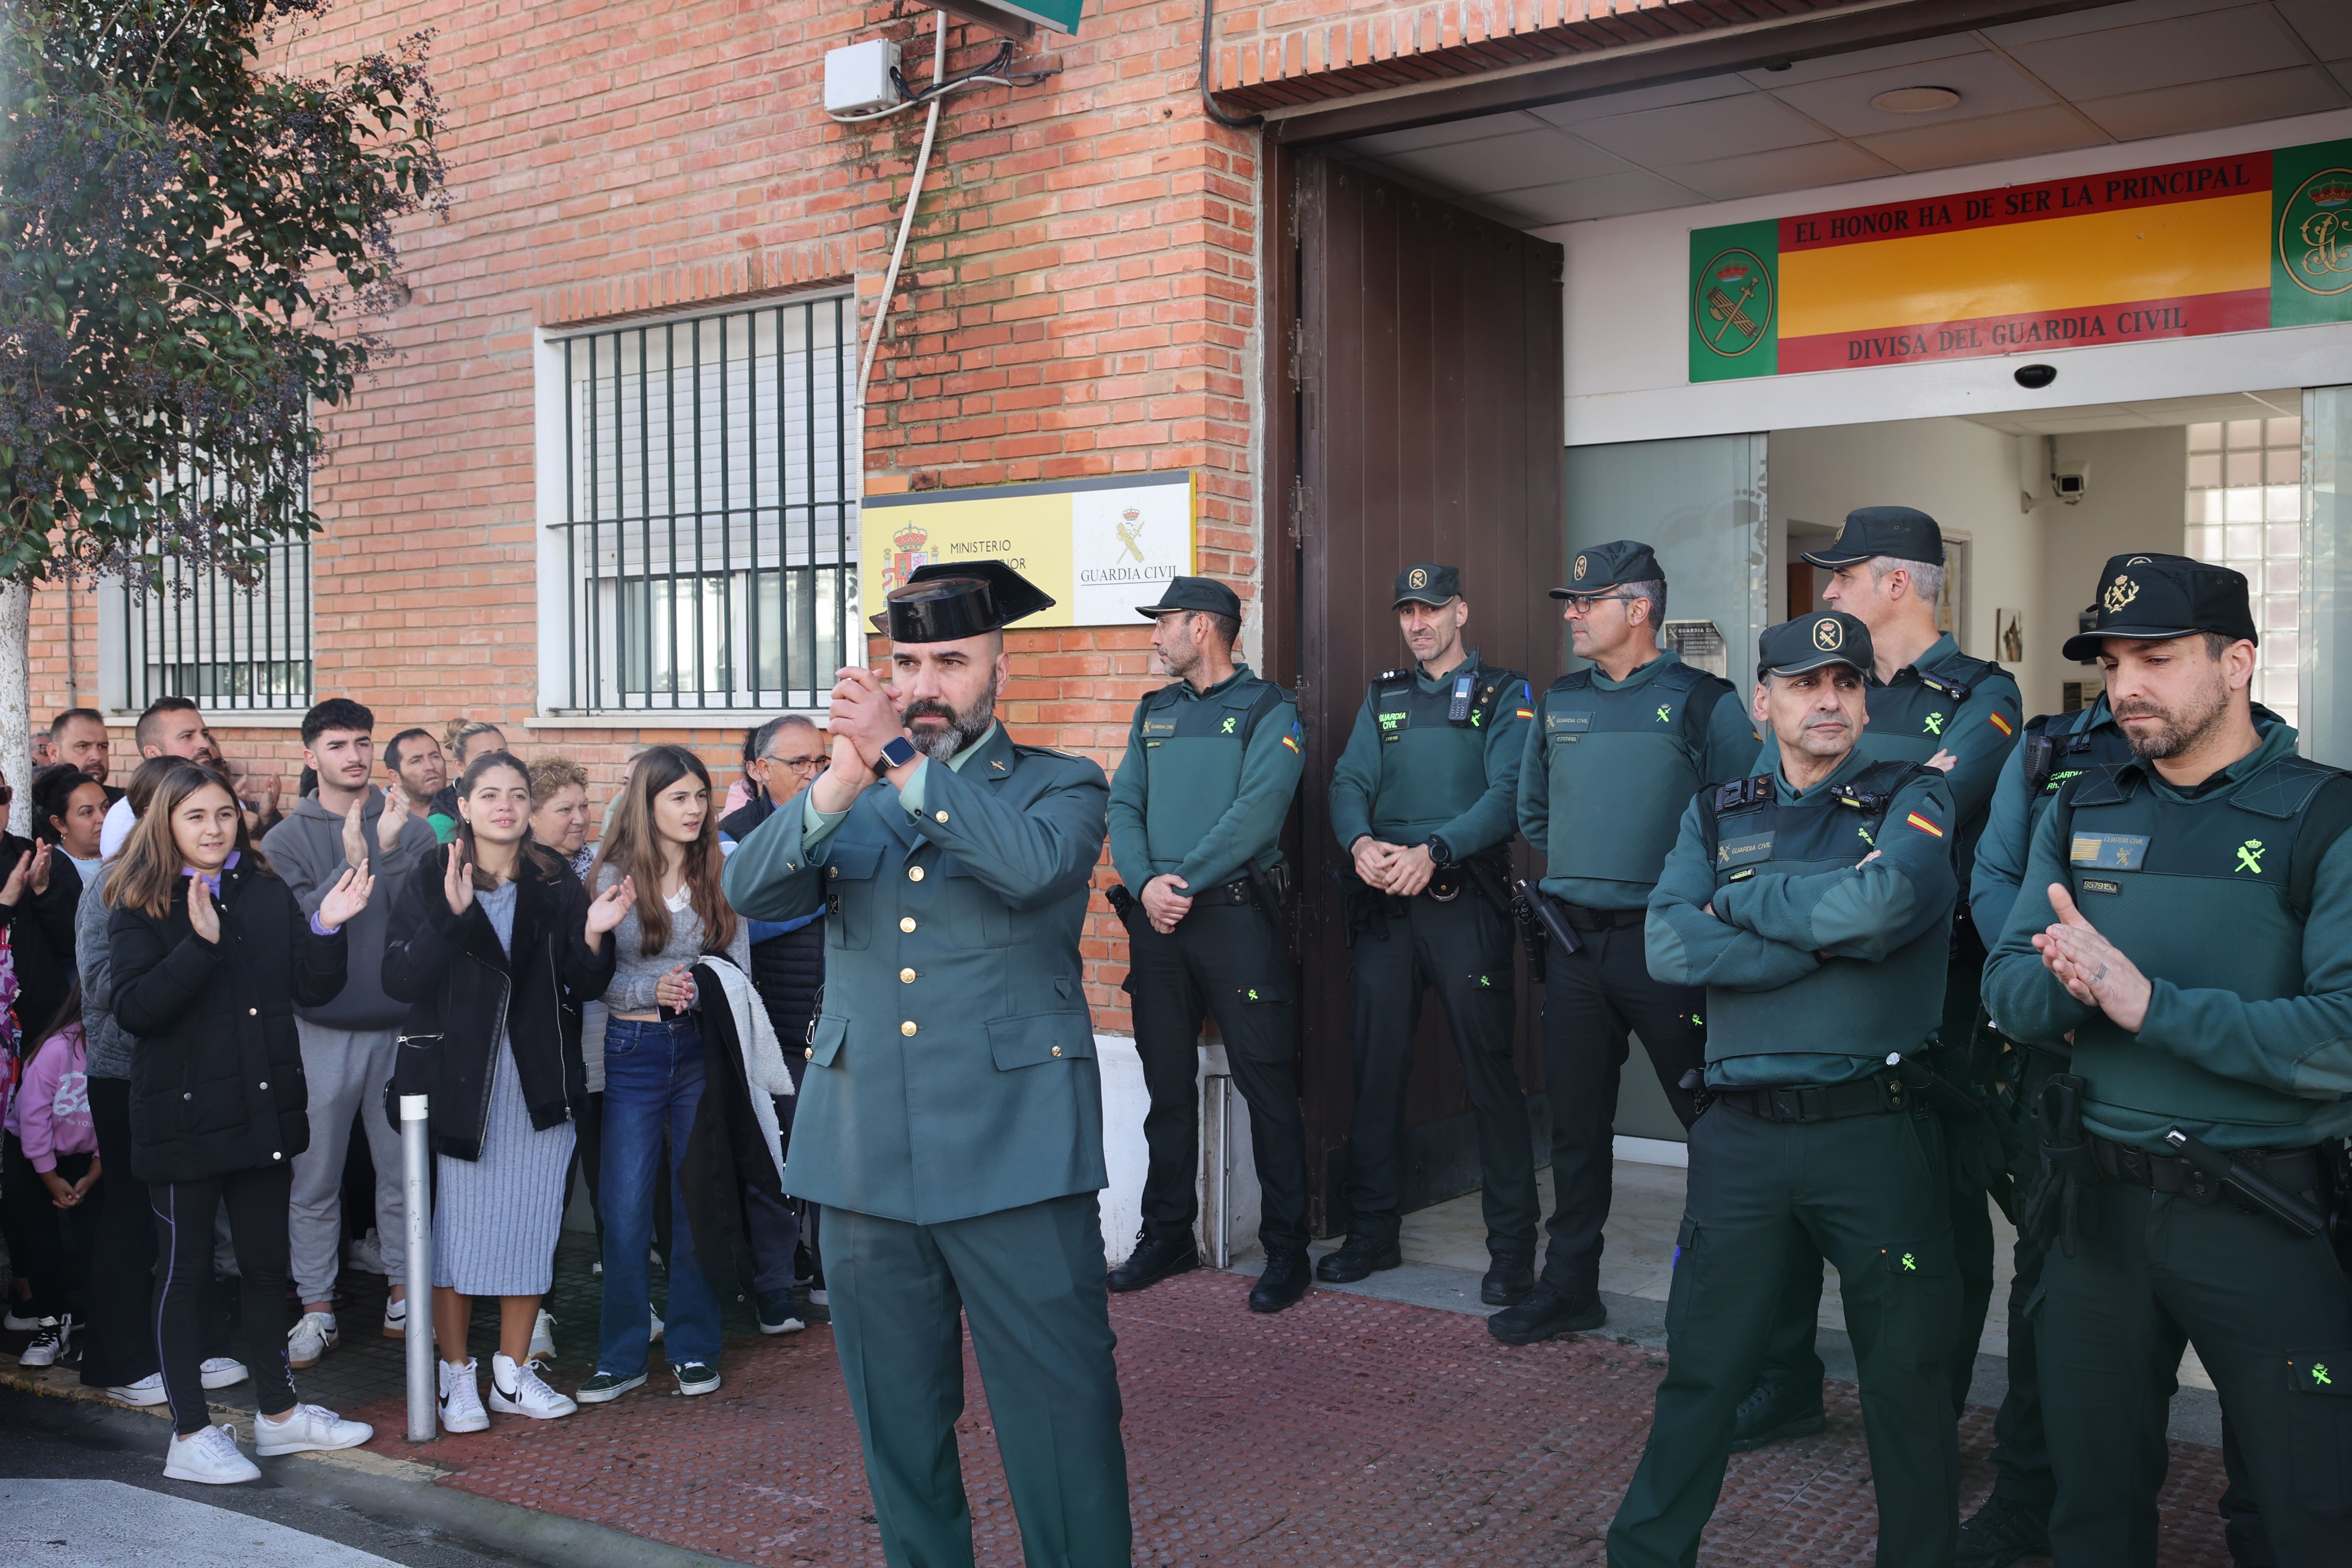 La Guardia Civil agradece el homenaje de Barbate.